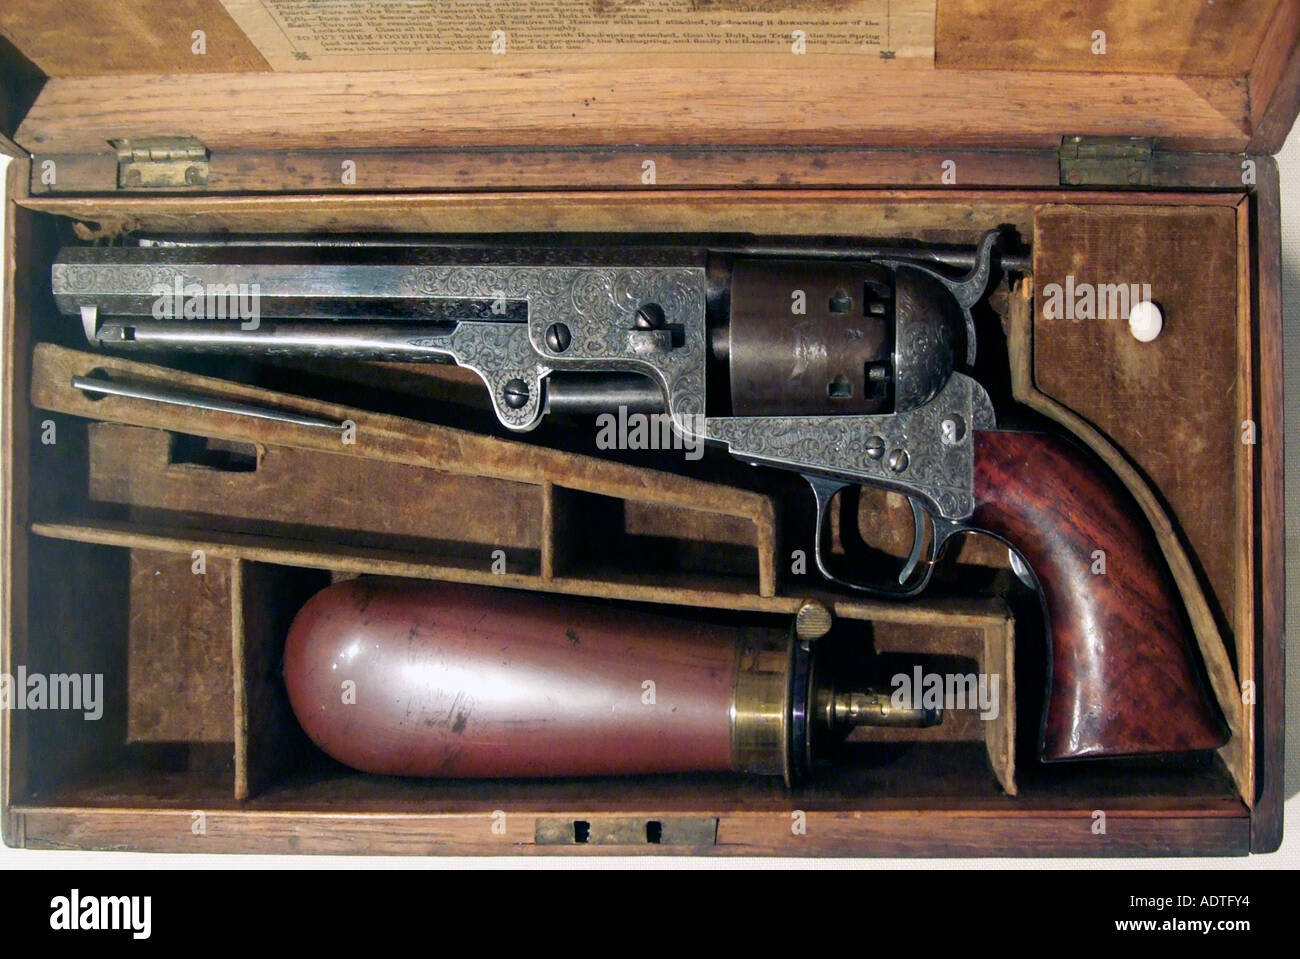 Pistolas de Co2 Crosman 1911bb 480fps 4.5mm – Residen Evil Militaría